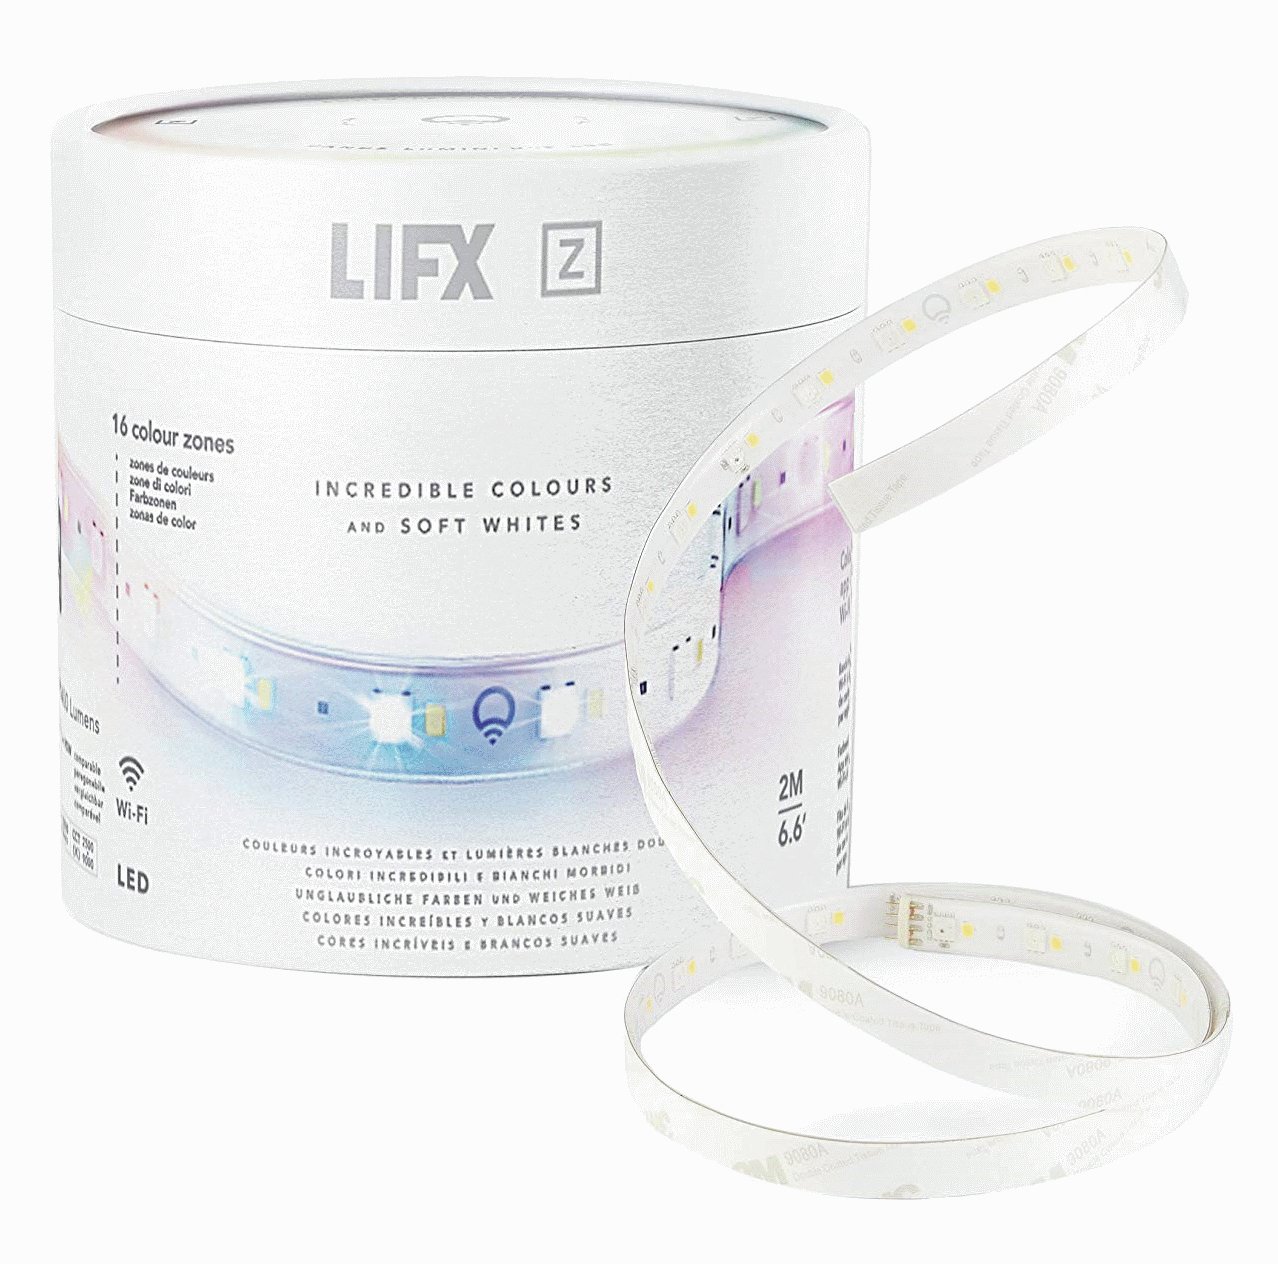 LIFX Z Starter Kit Review